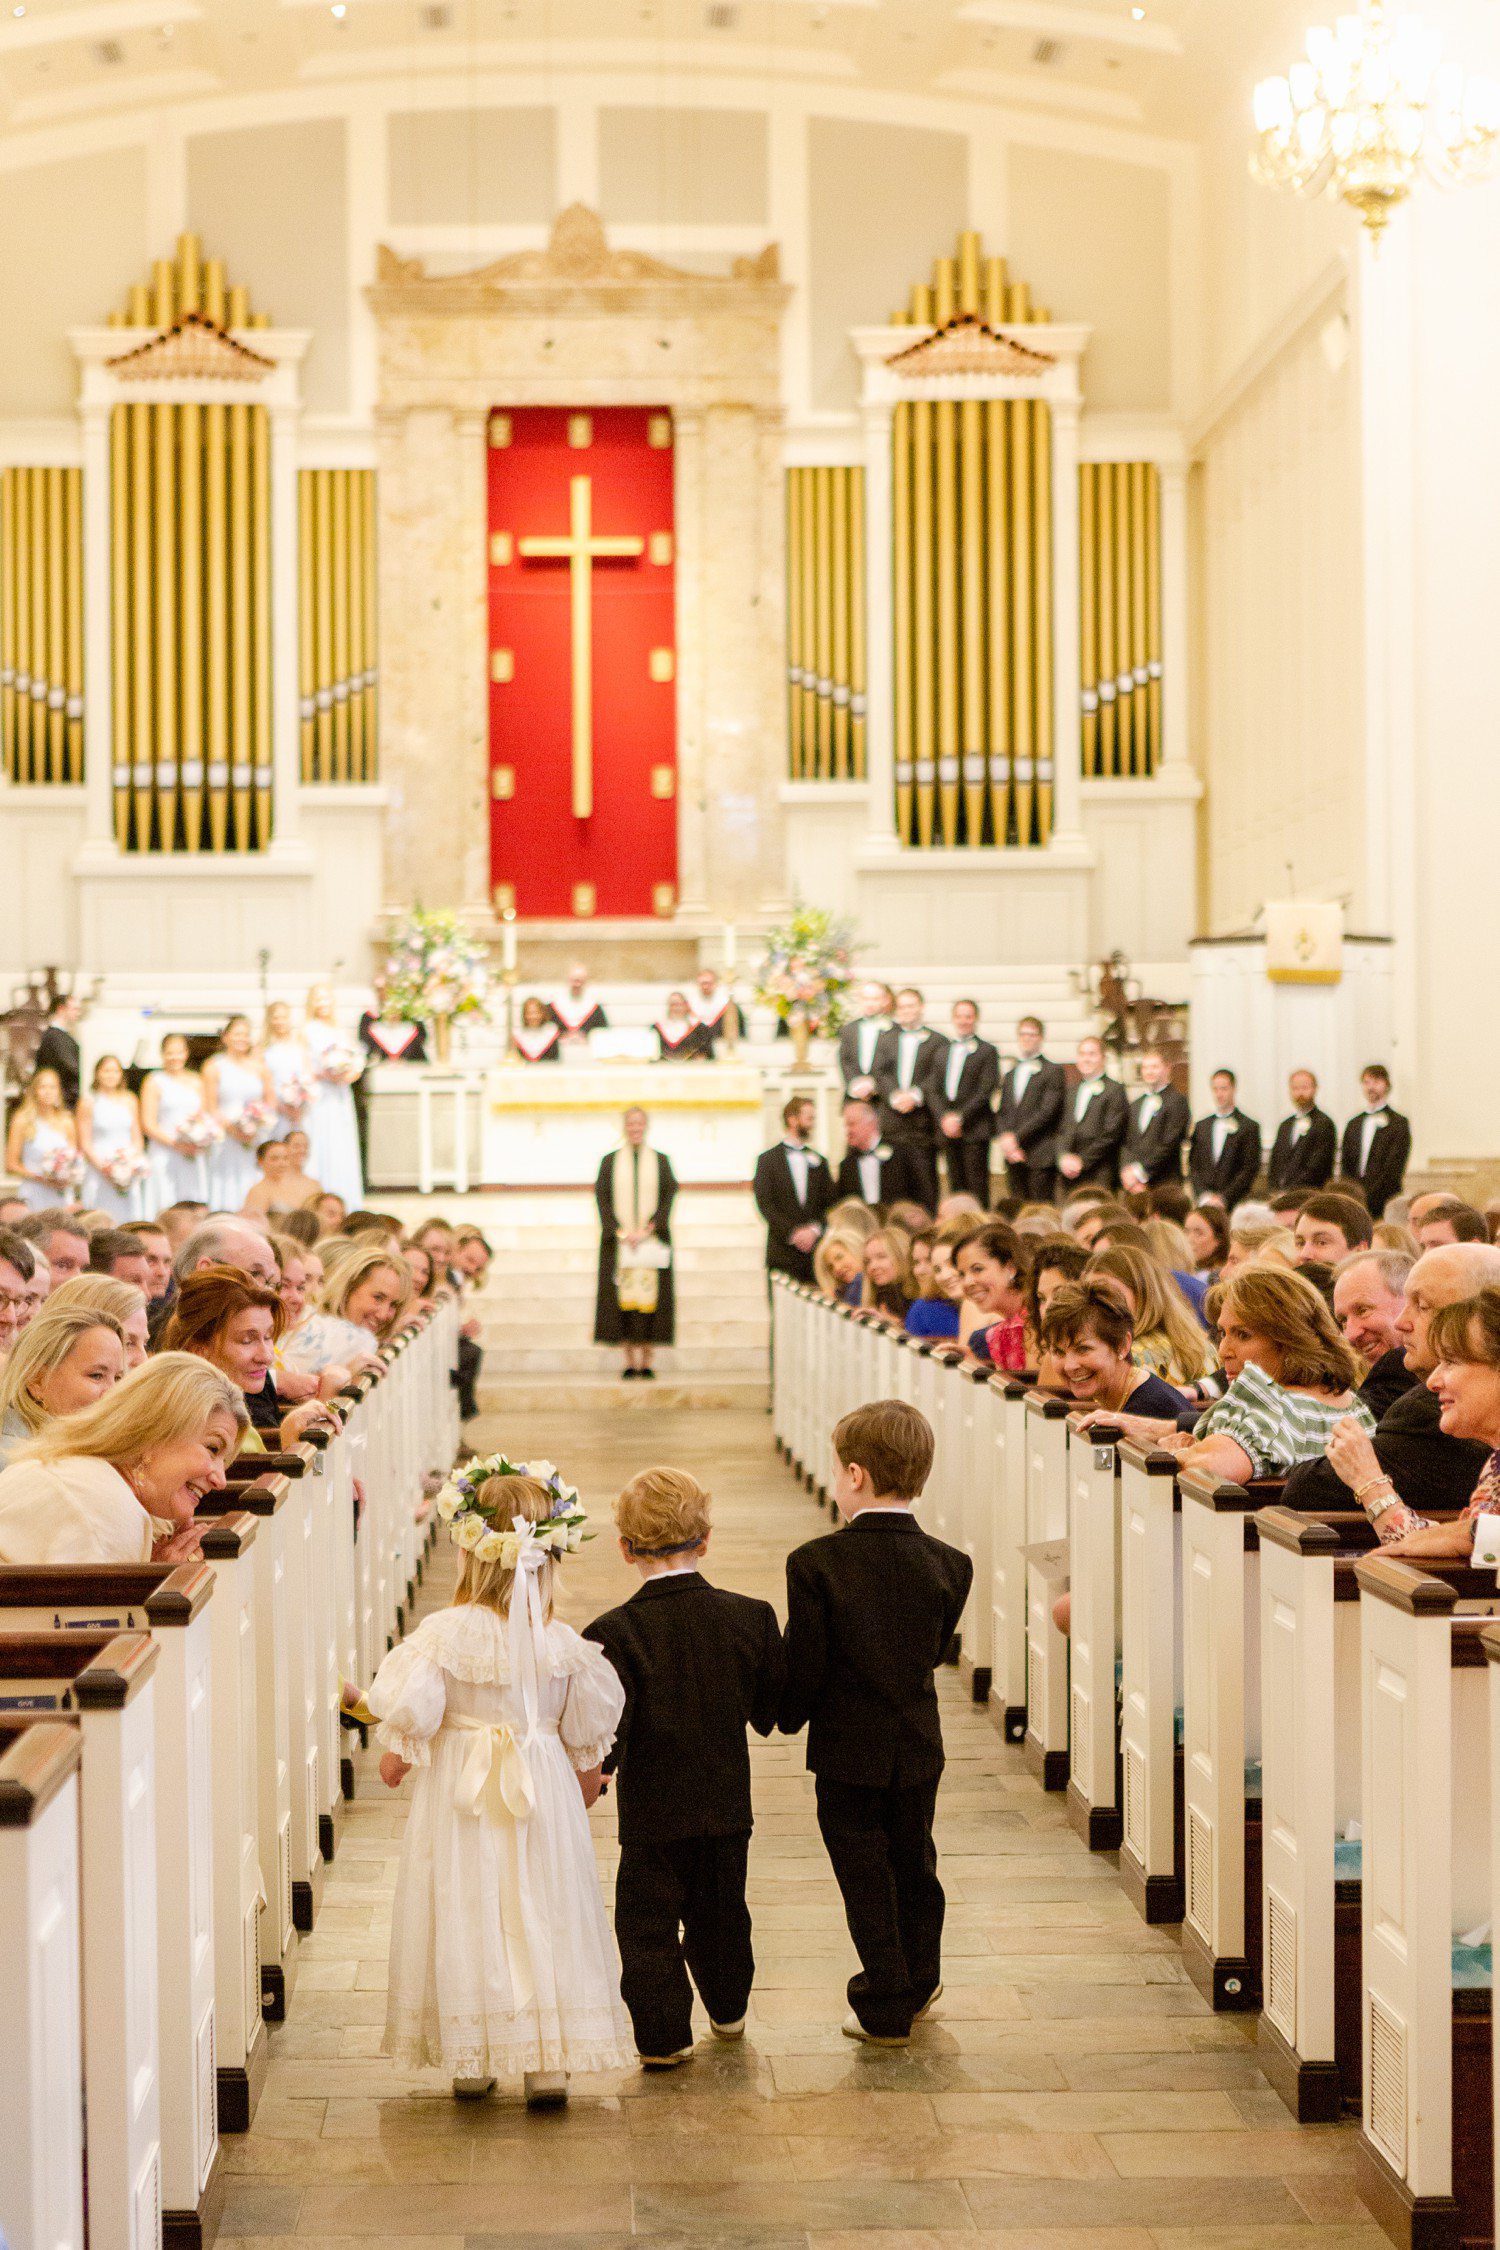 Flower girl and ring bearers walking down aisle for wedding at St. Luke's United Methodist Church in Houston. 